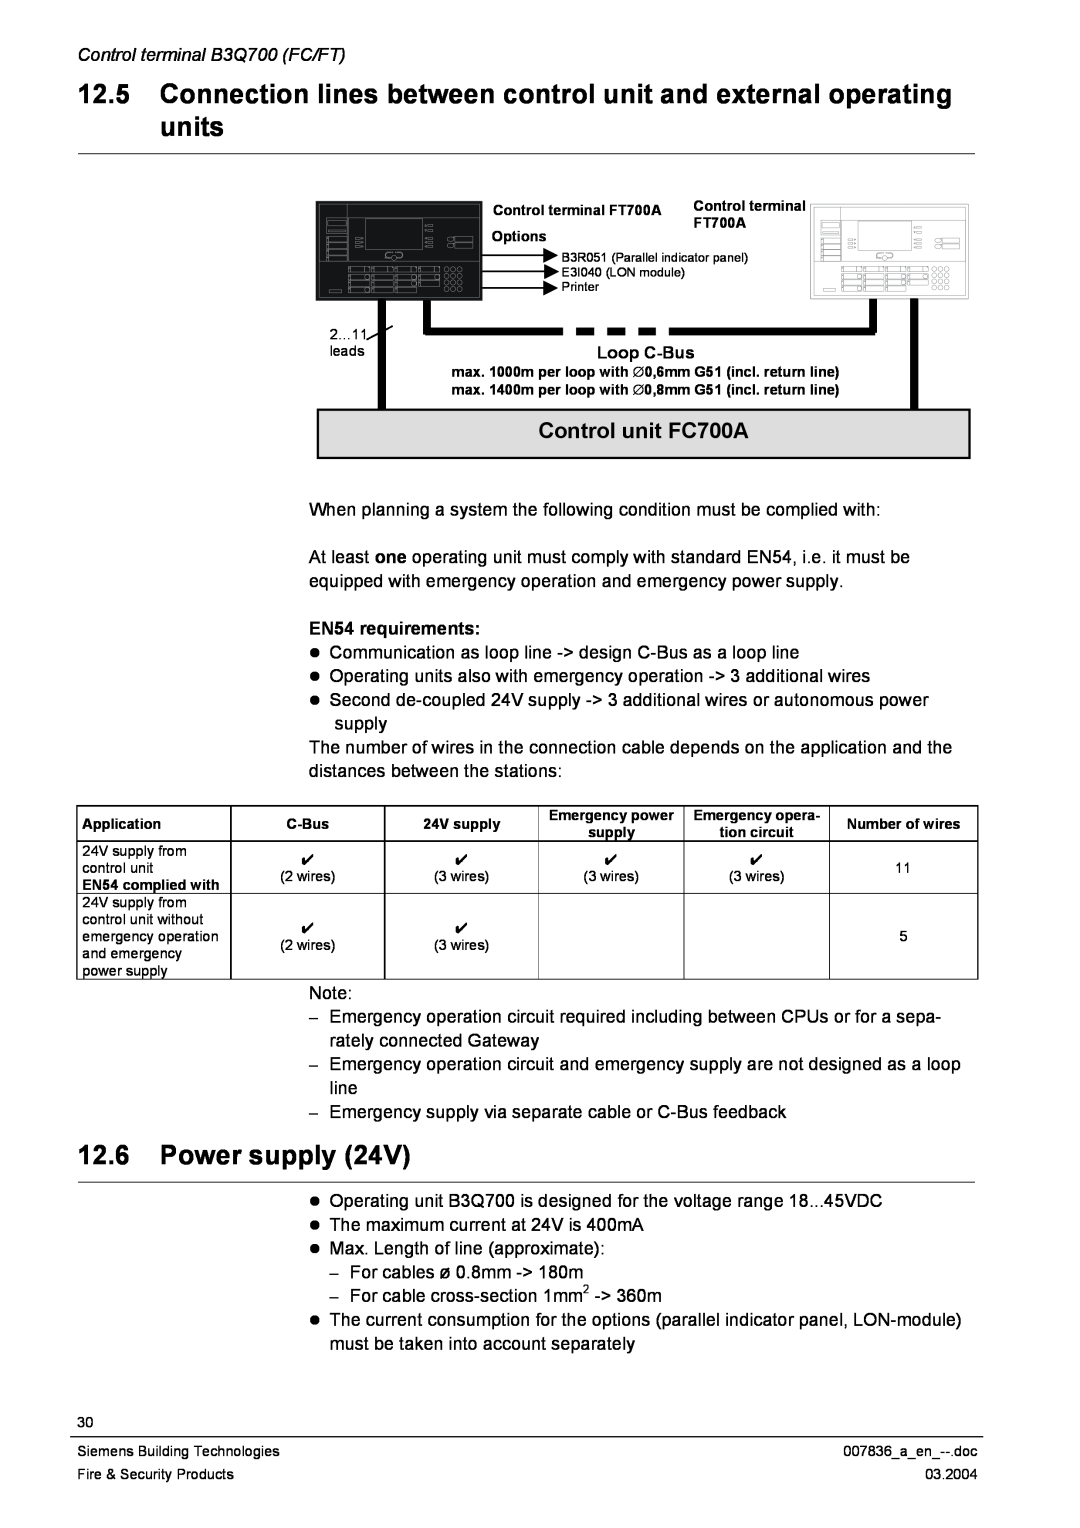 Siemens manual 12.6Power supply, Control unit FC700A, Loop C-Bus, EN54 requirements, Control terminal B3Q700 FC/FT 